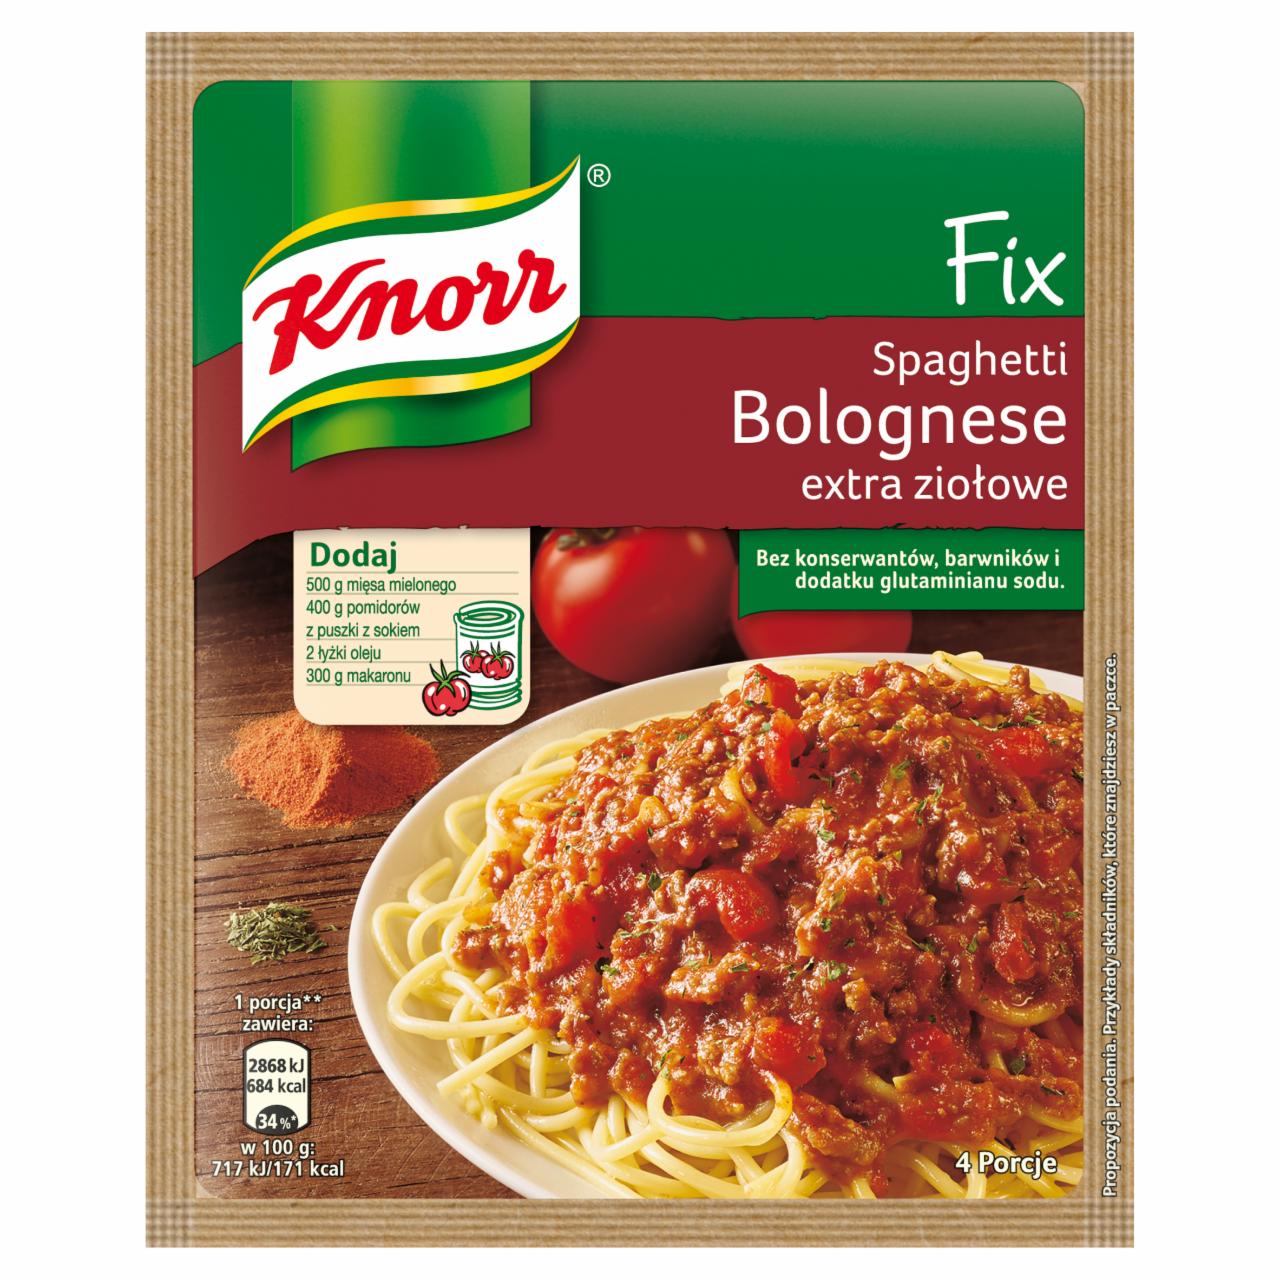 Zdjęcia - Knorr Fix spaghetti bolognese extra ziołowe 48 g